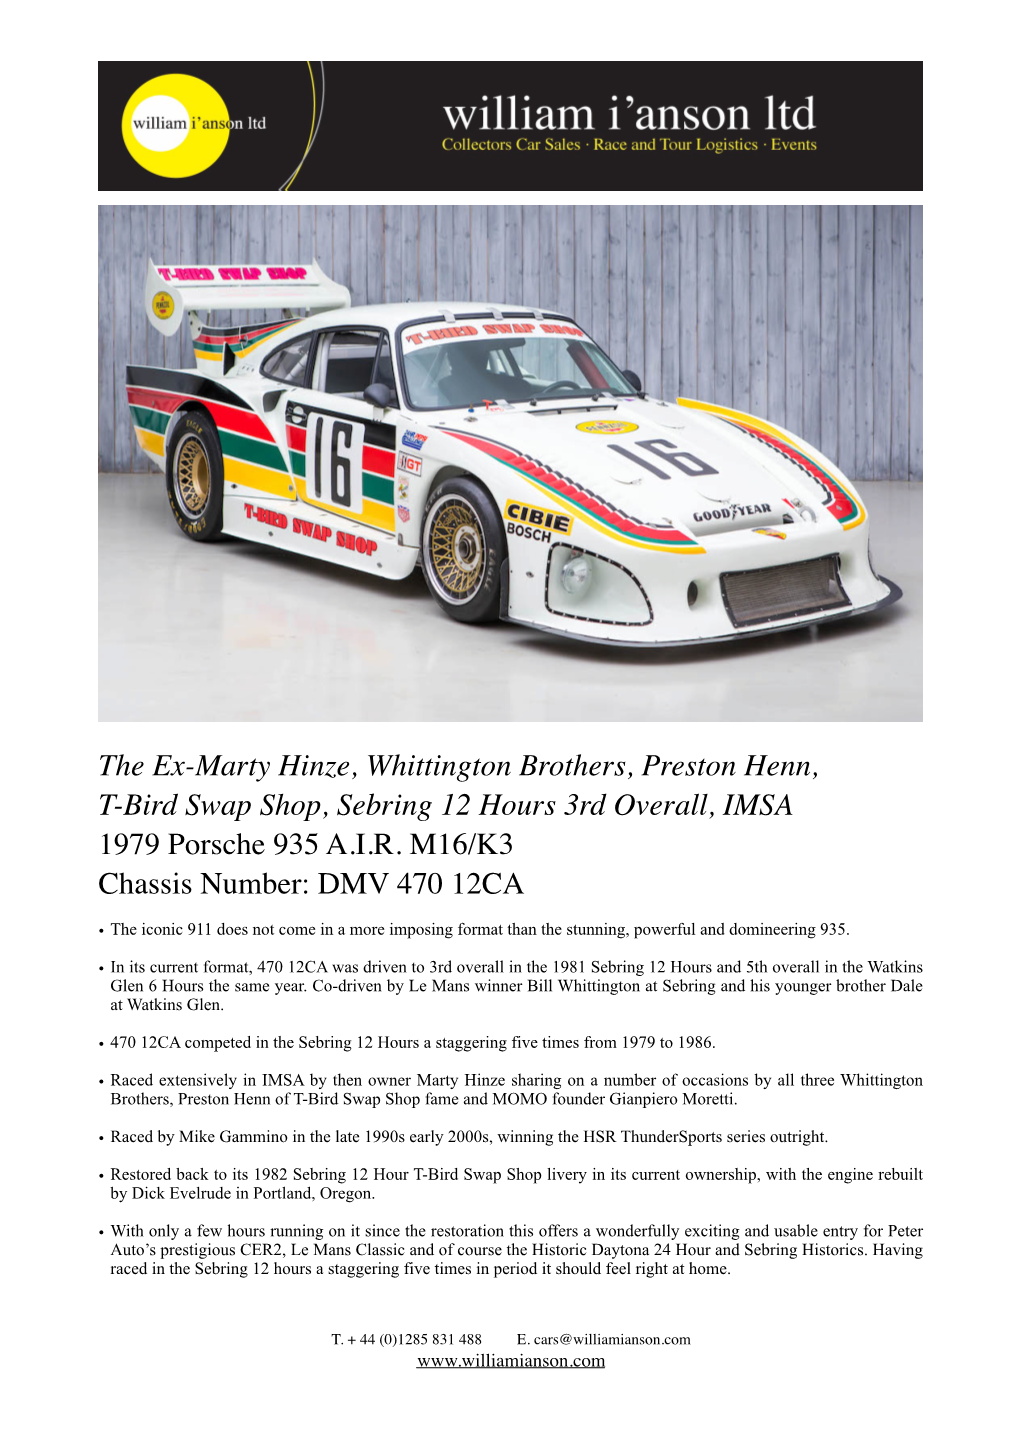 The Ex-Marty Hinze, Whittington Brothers, Preston Henn, T-Bird Swap Shop, Sebring 12 Hours 3Rd Overall, IMSA 1979 Porsche 935 A.I.R